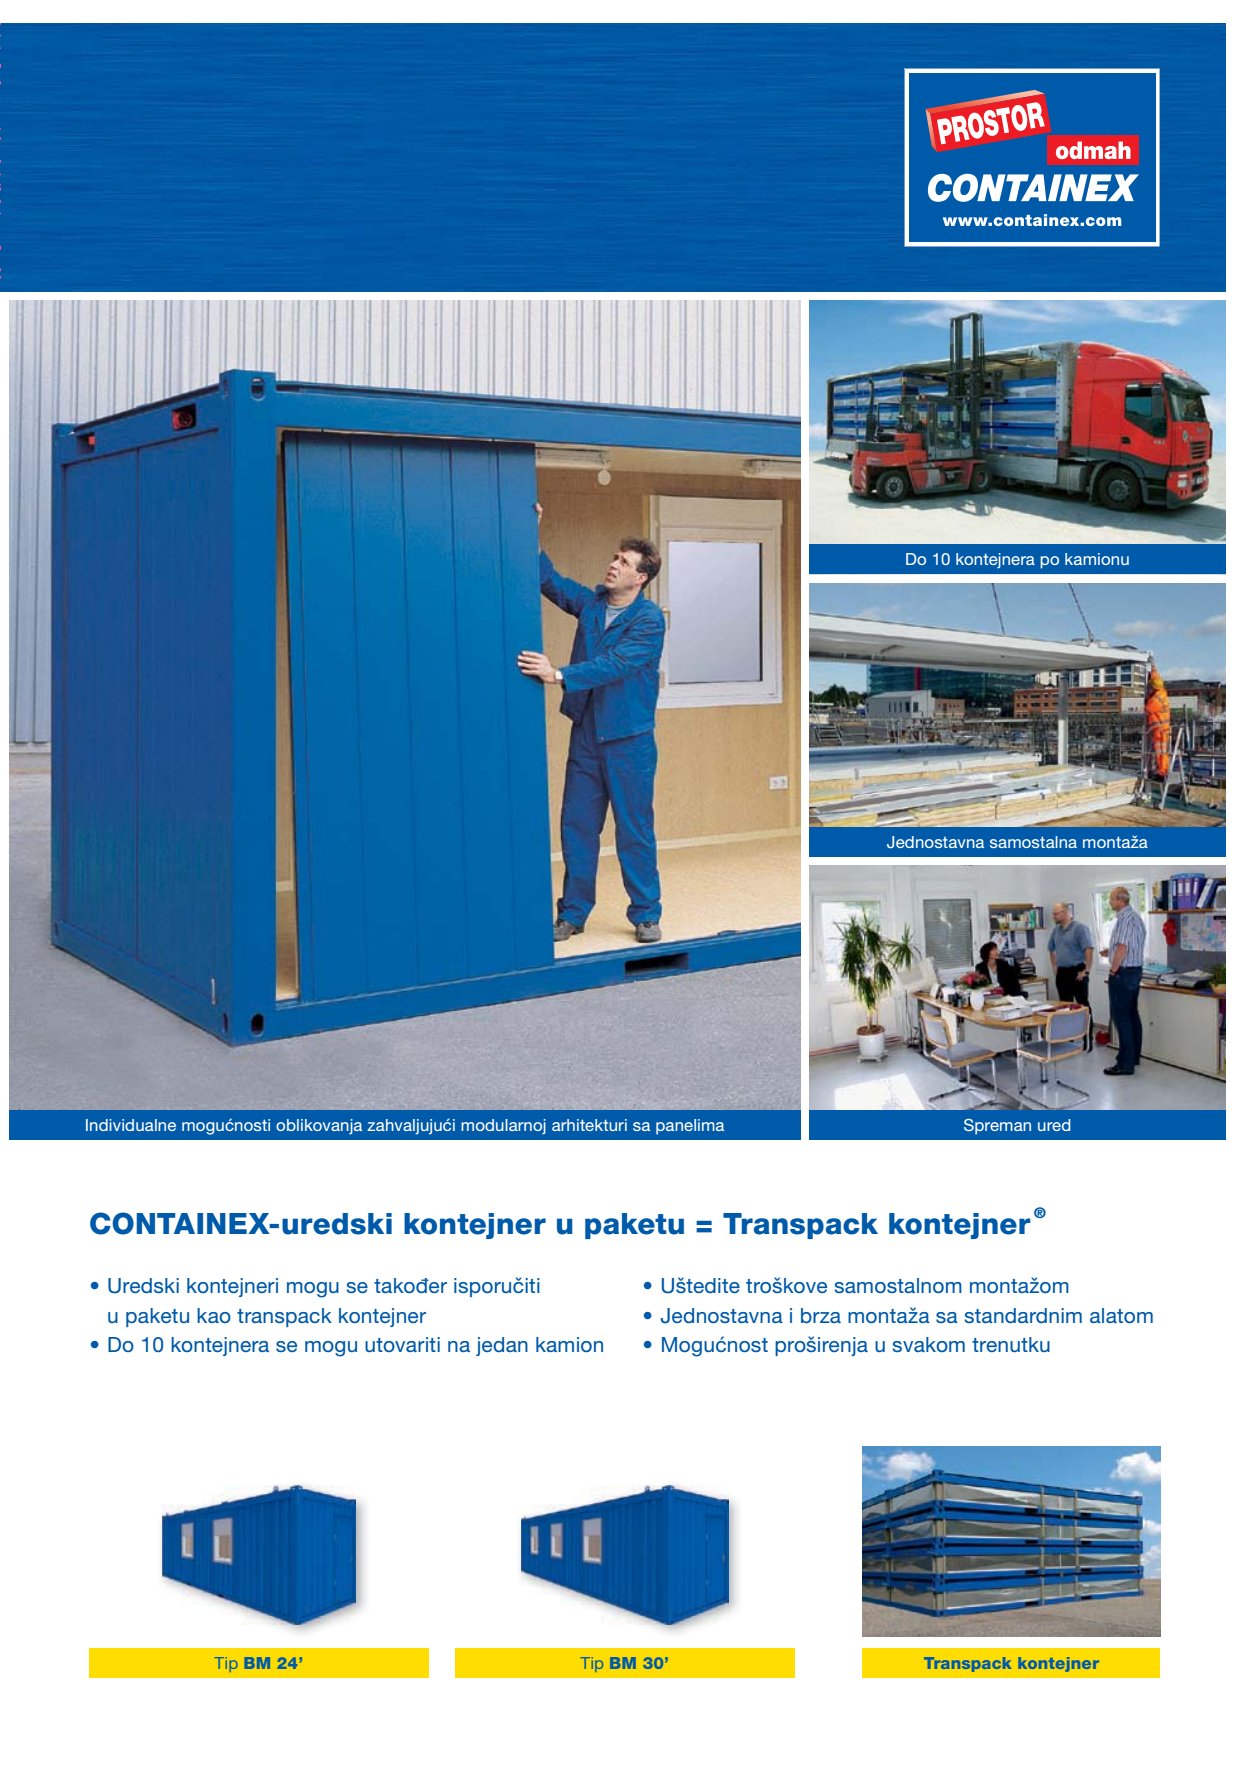 CONTAINEX-uredski kontejner paketu